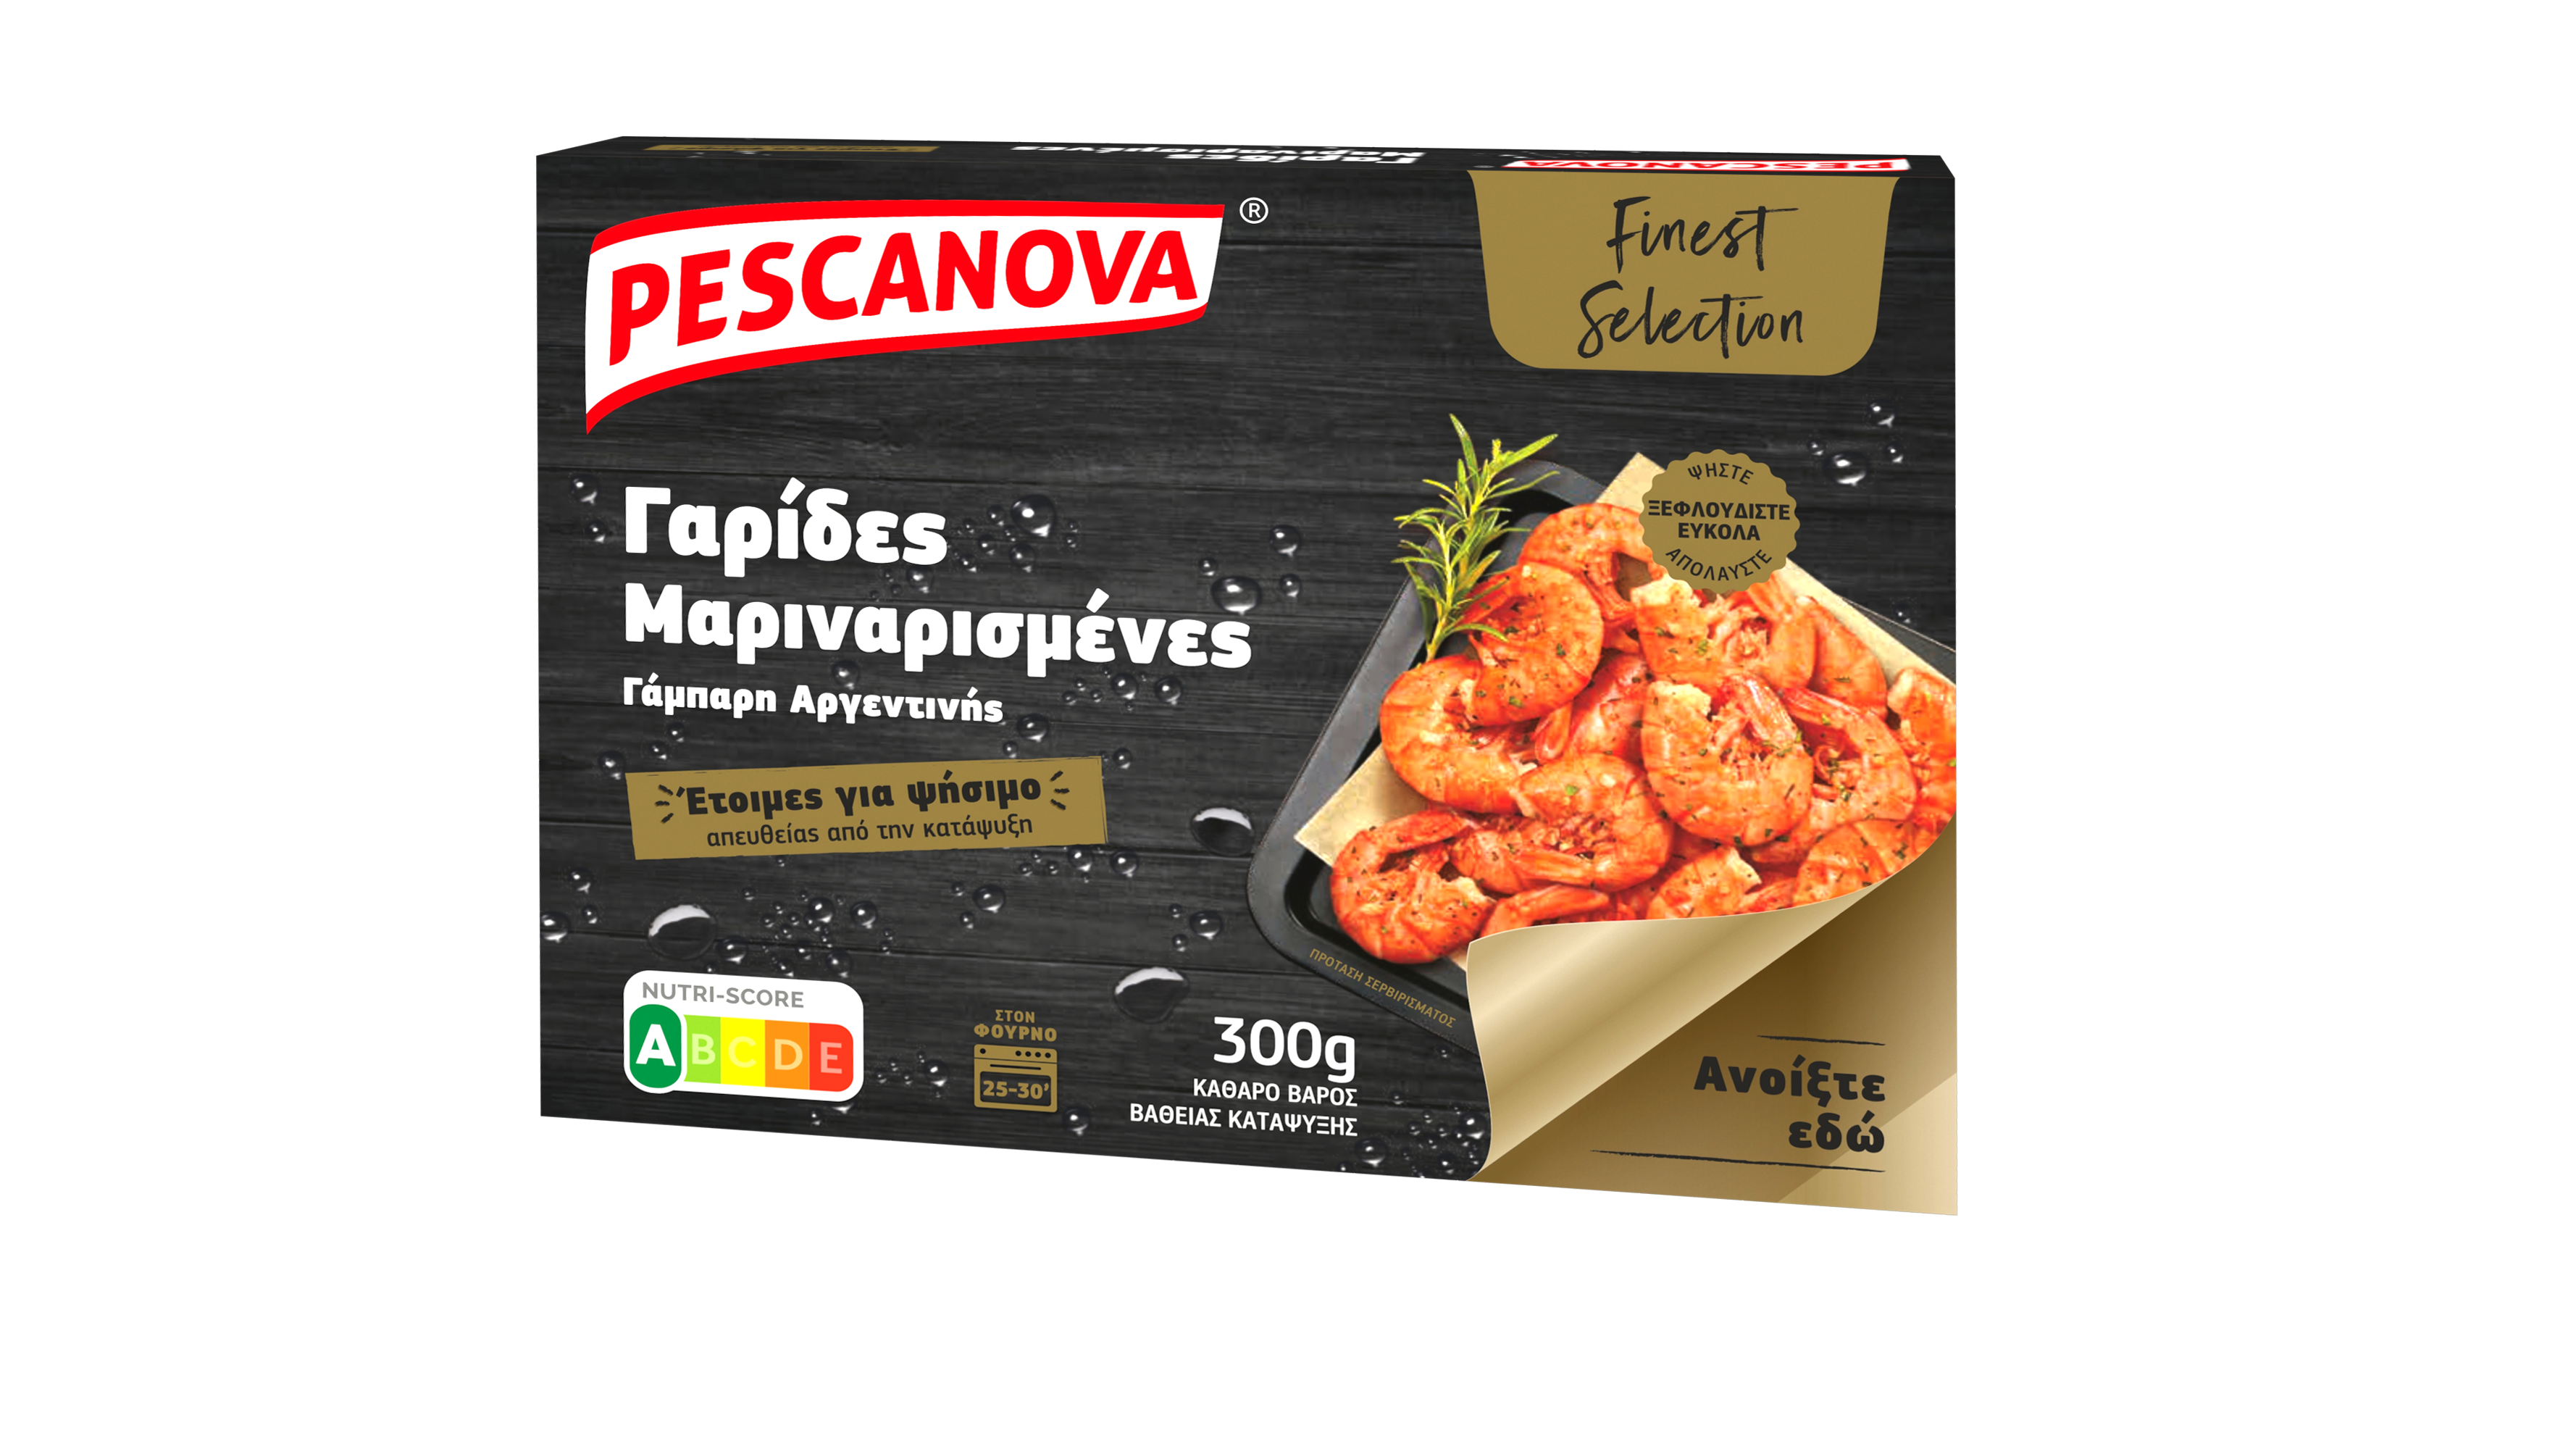 Easy peel shrimps with marinade